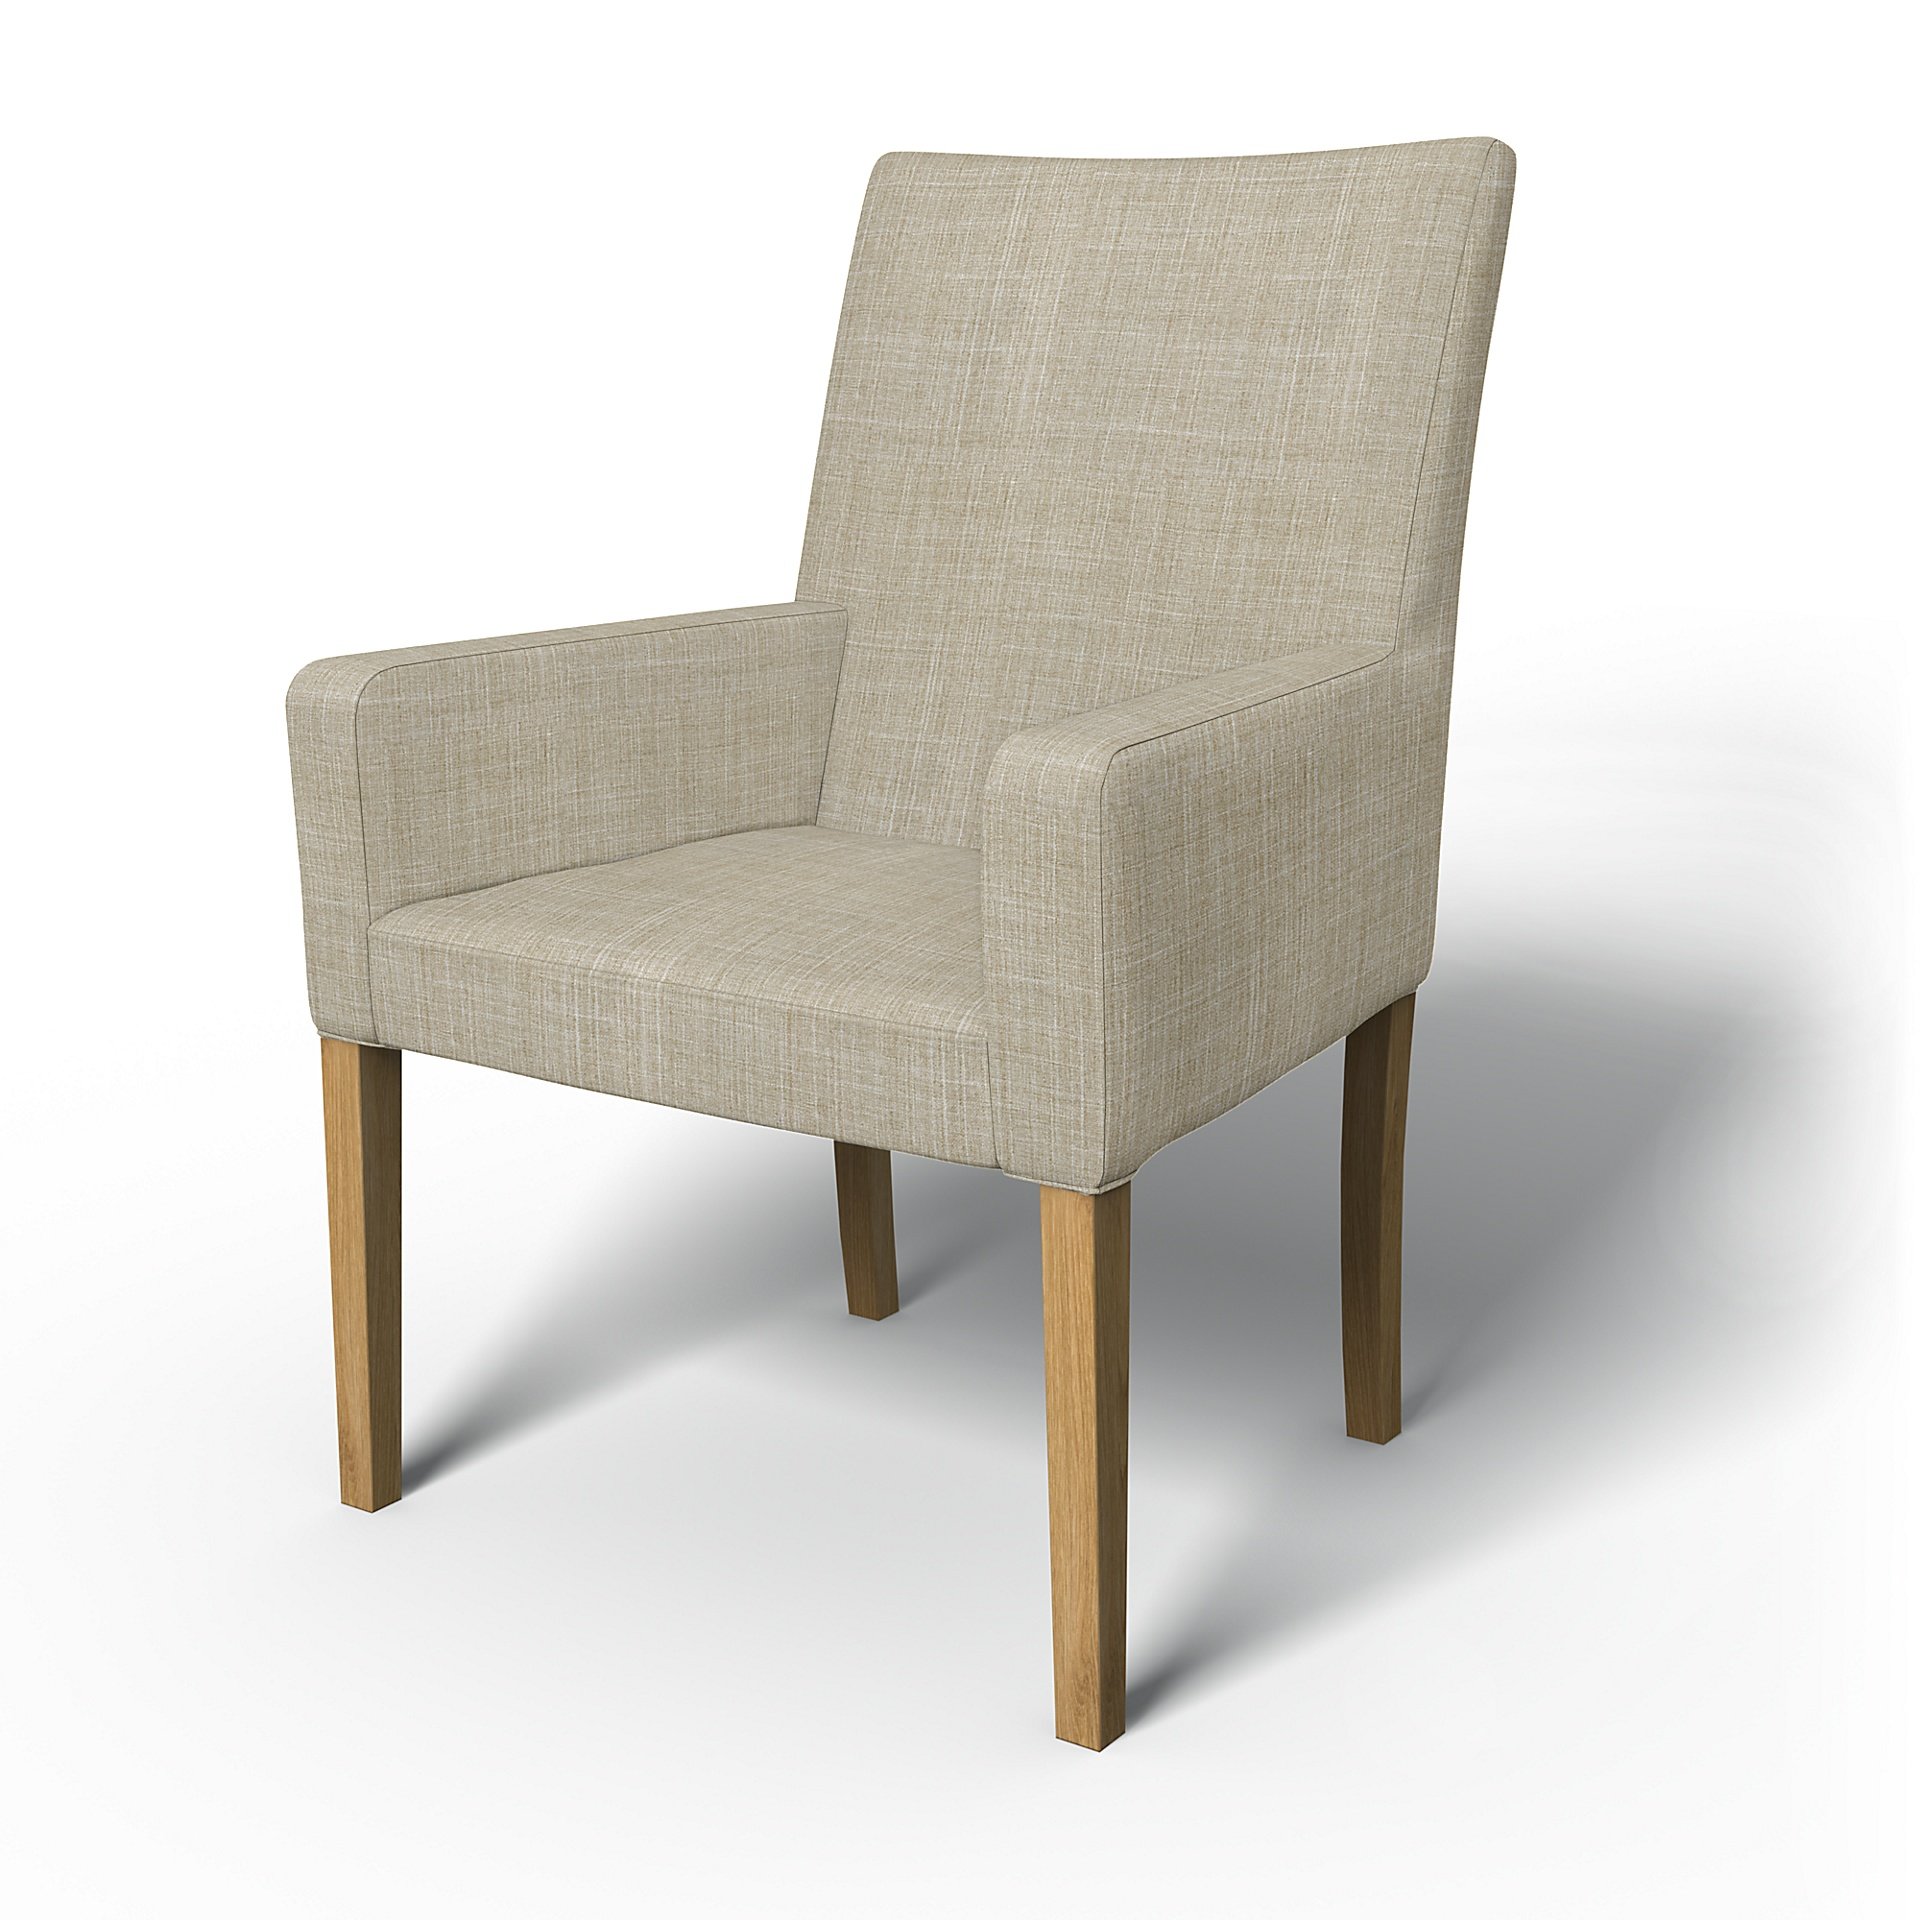 IKEA - Henriksdal, Chair cover w/ armrests, short, Sand Beige, Boucle & Texture - Bemz